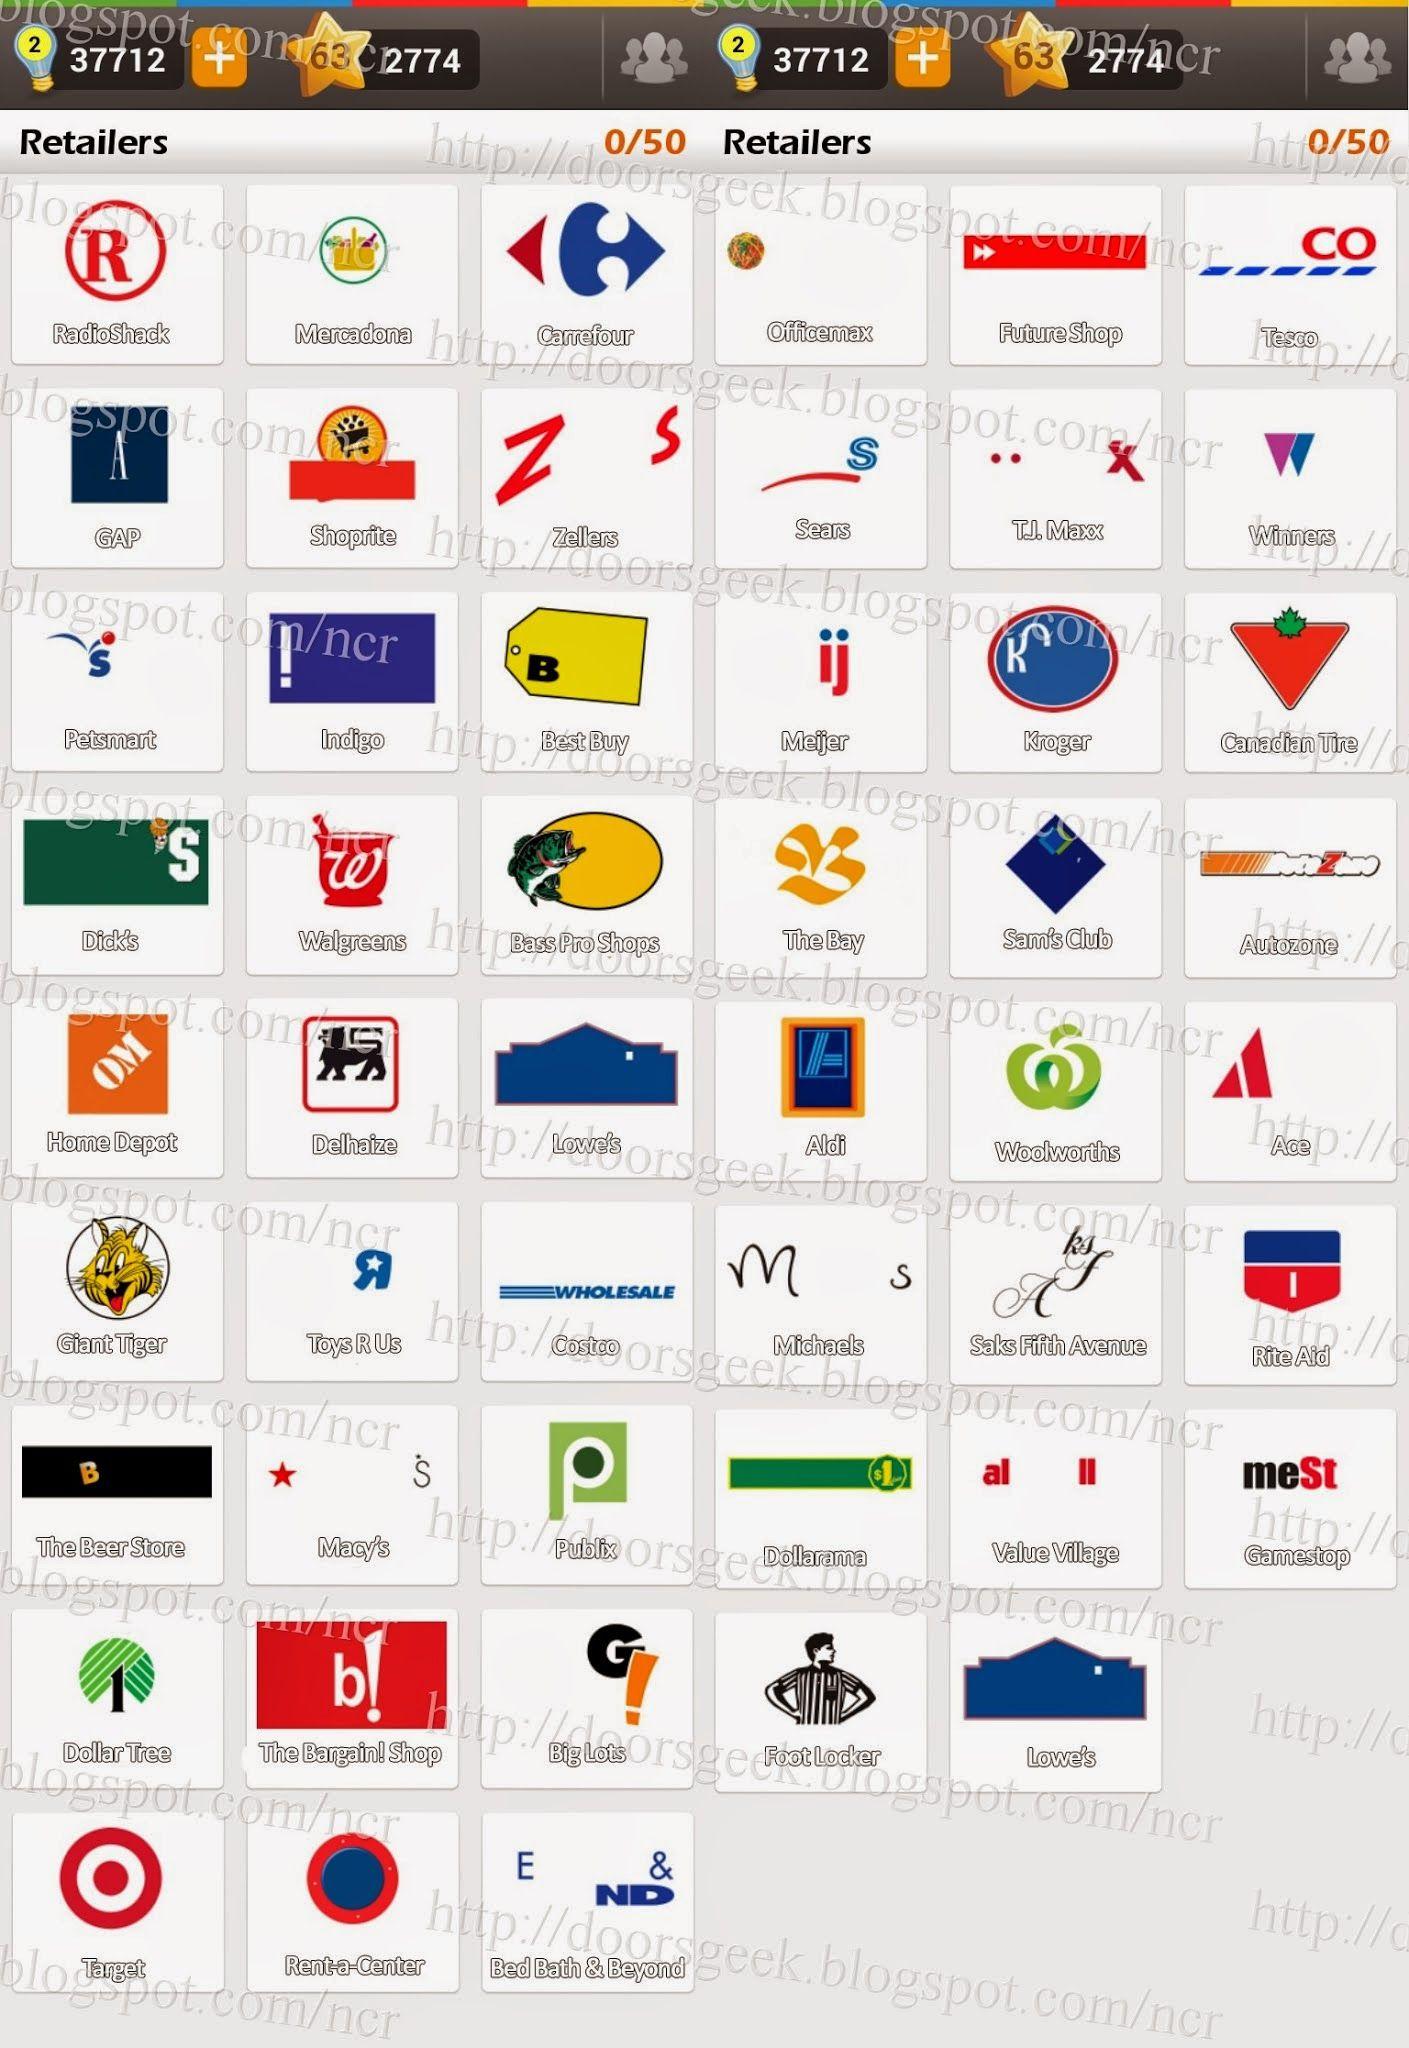 Retailer Logo - Logo Game: Guess the Brand [Bonus] Retailers Doors Geek